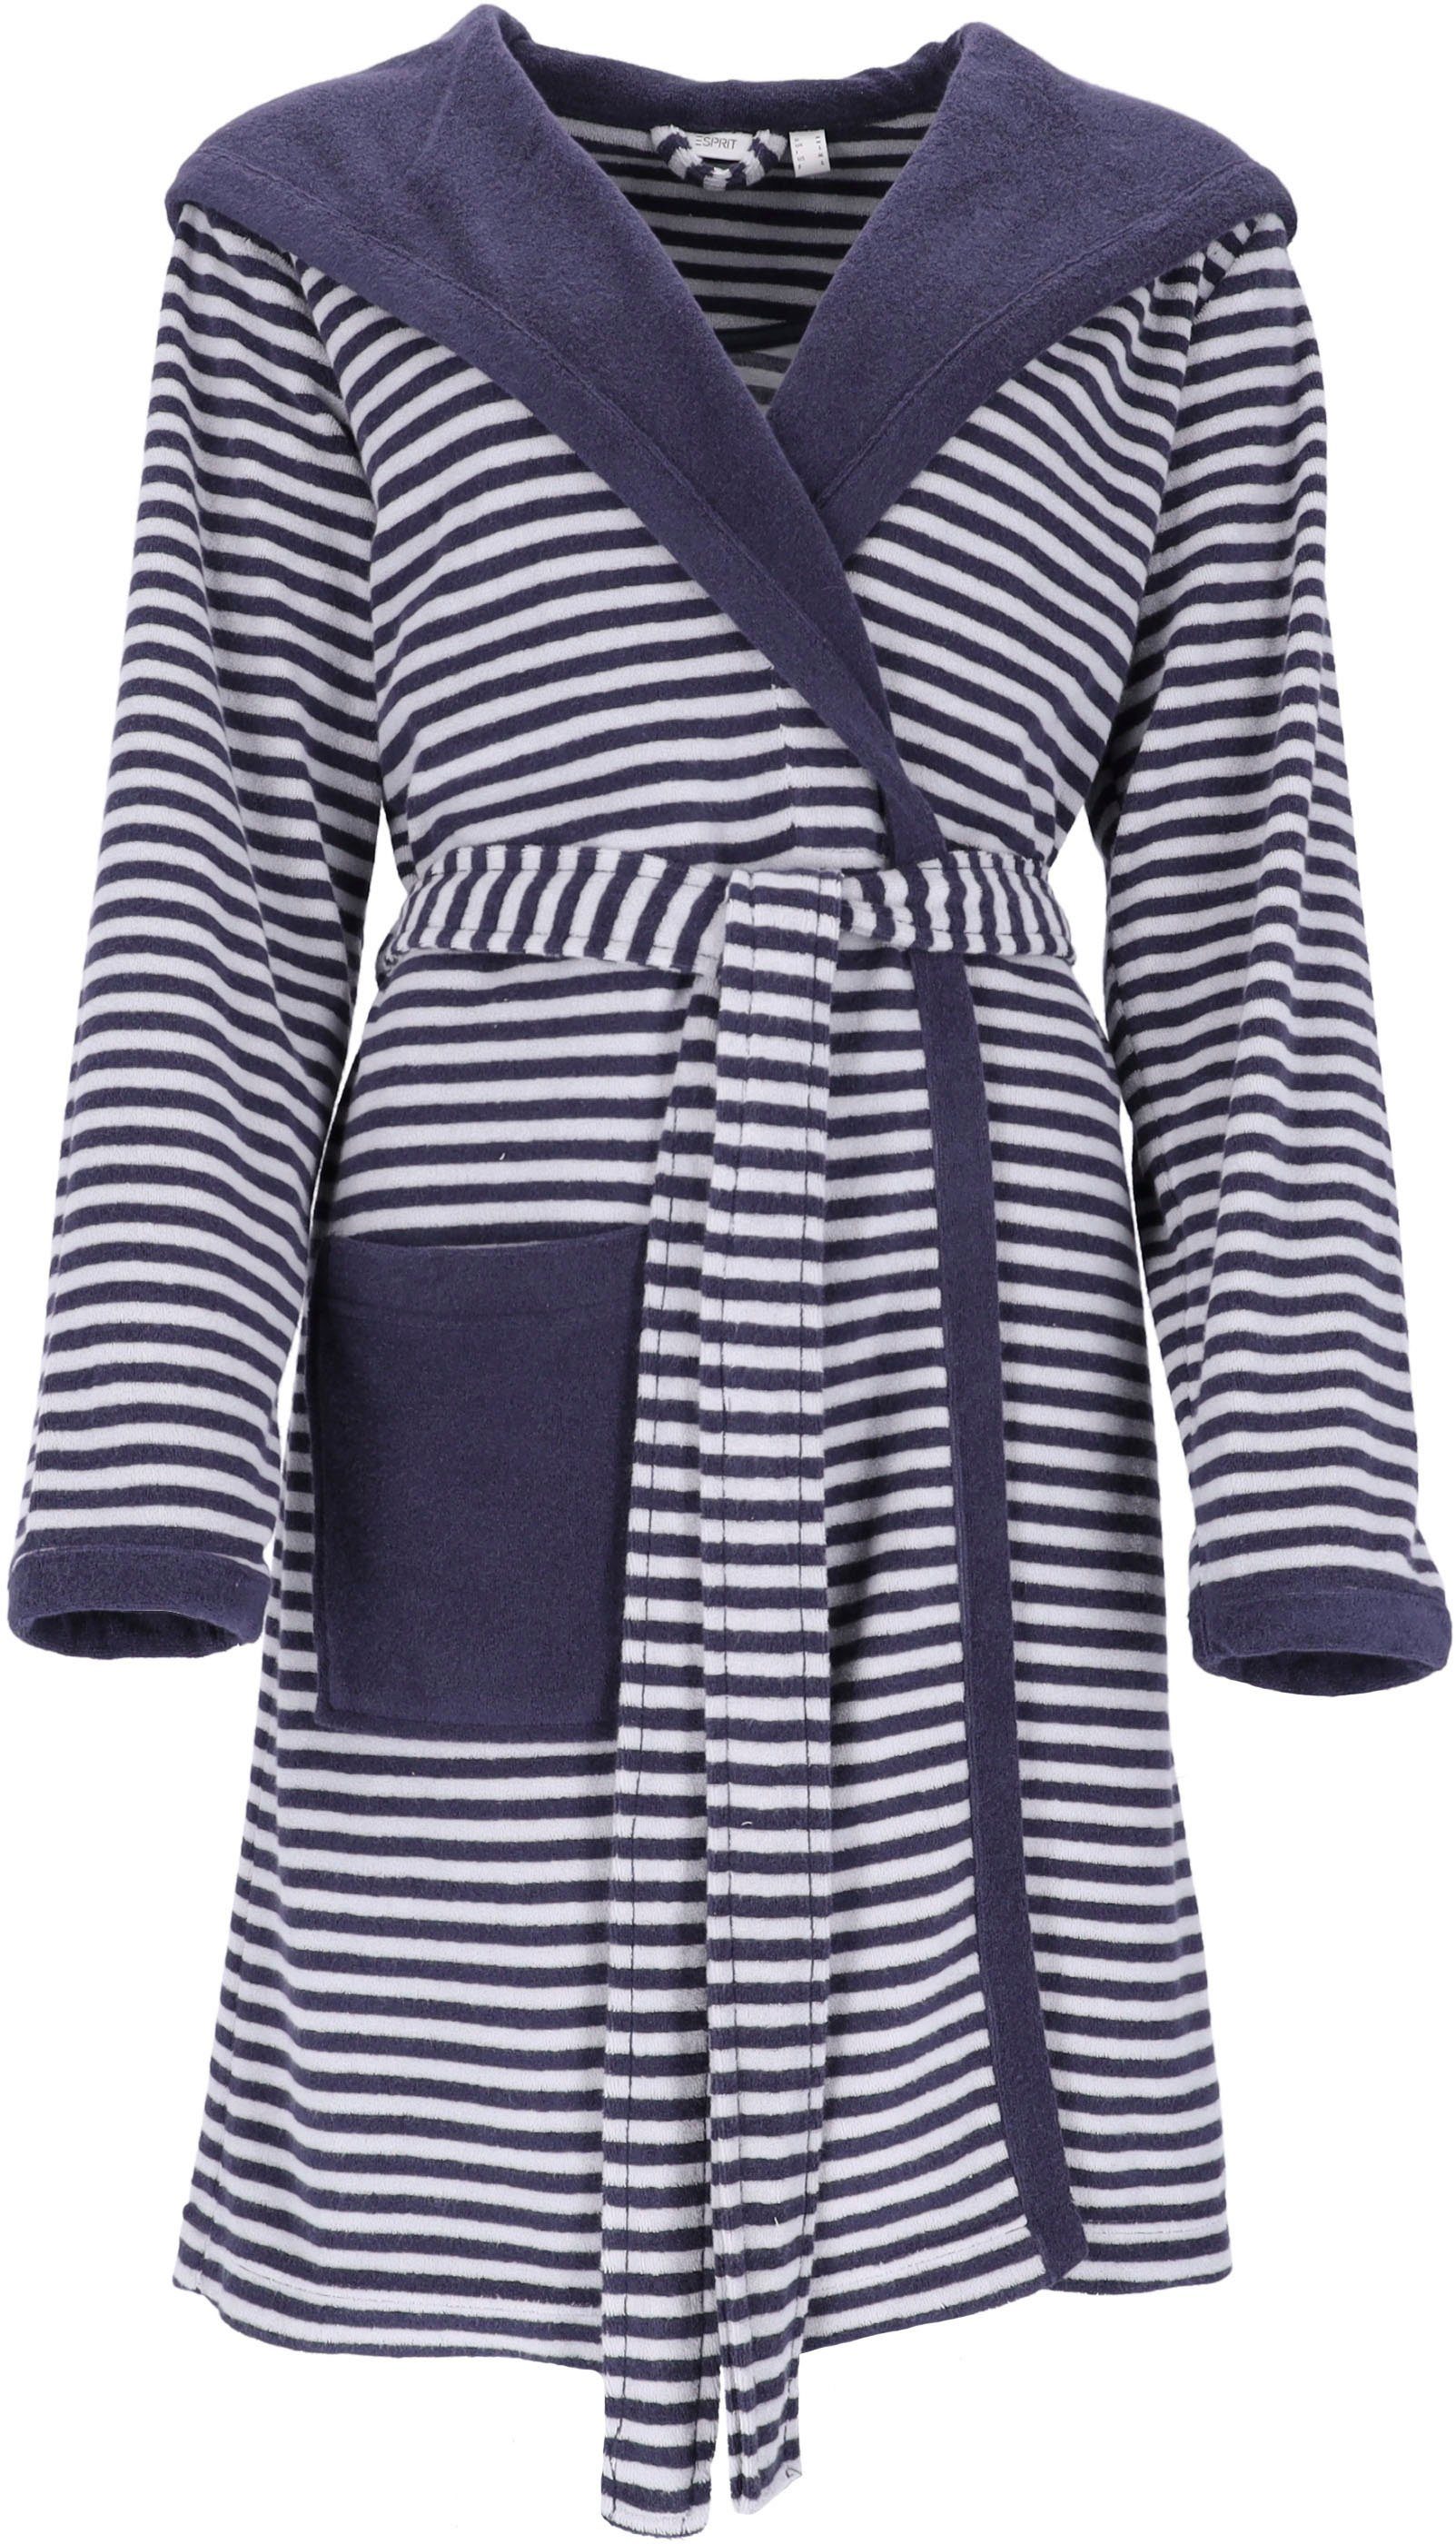 Esprit Damenbademantel Striped Hoody, Kapuze, mit navy kurz gestreift, Jersey, blue Kurzform, Kaputze & Gürtel, Logostickerei